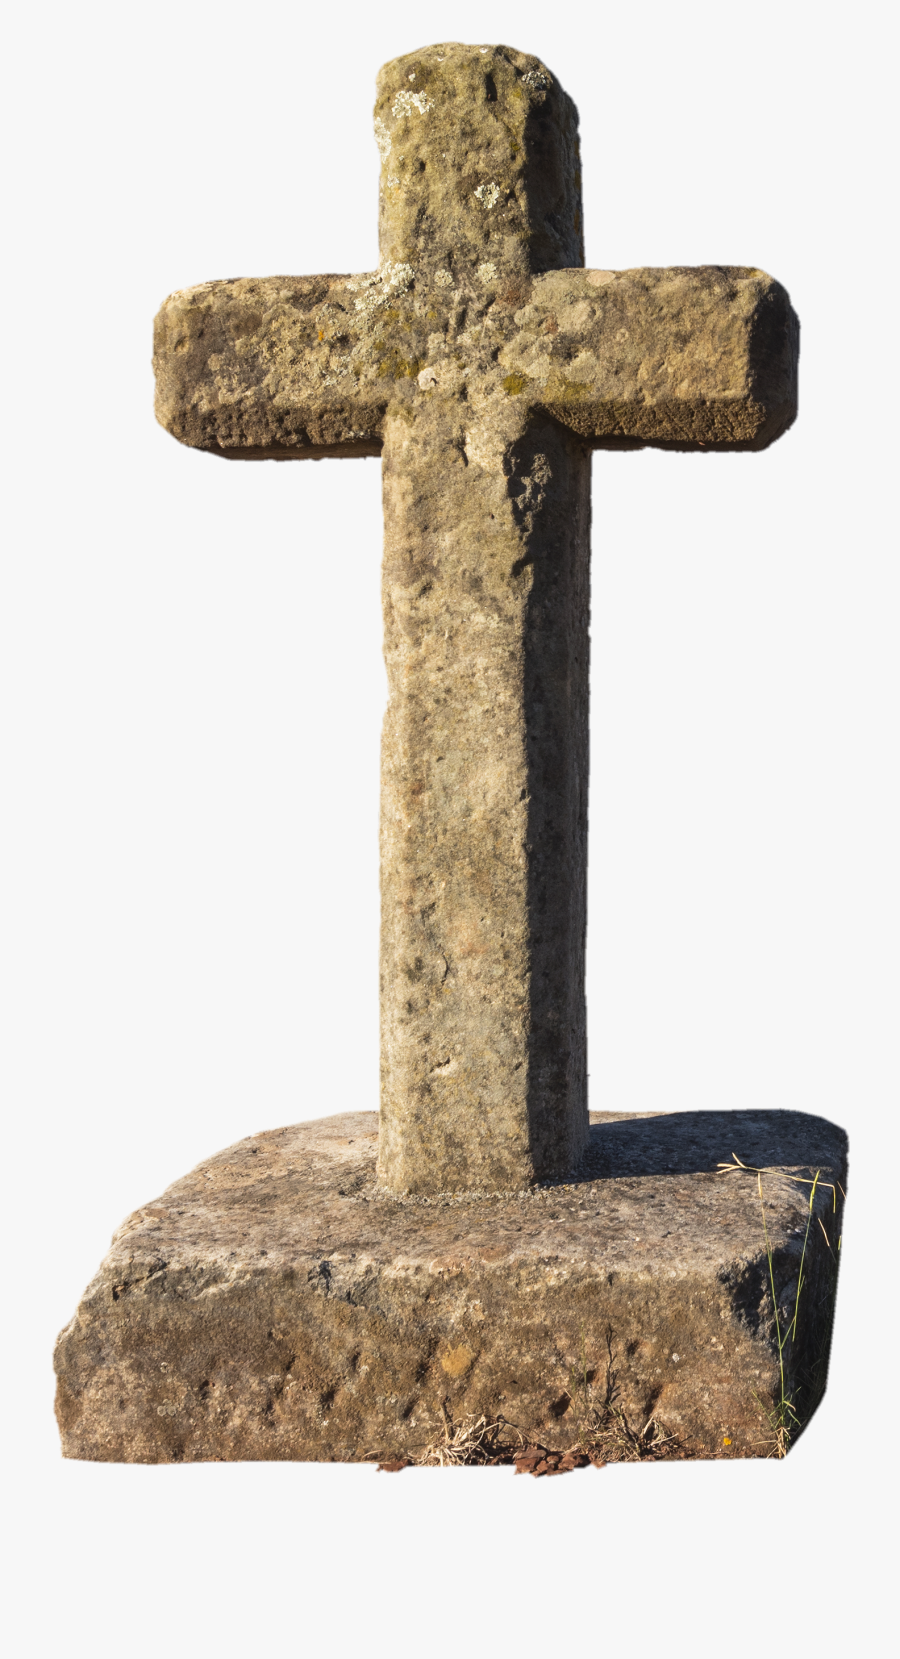 Stone Cross Transparent - Stone Cross Png, Transparent Clipart